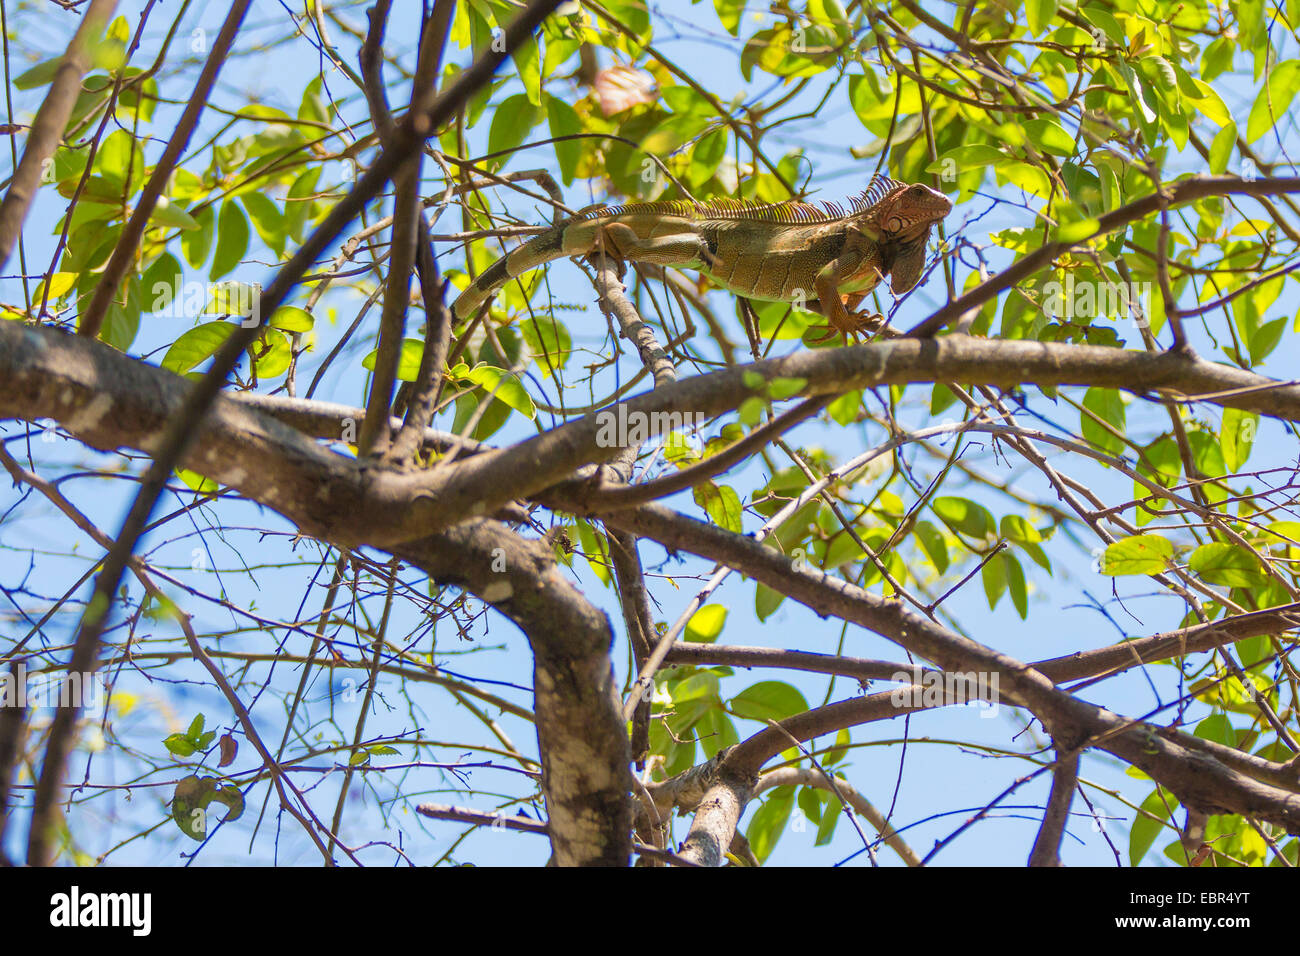 green iguana, common iguana (Iguana iguana), climbing in tree top, Costa Rica Stock Photo